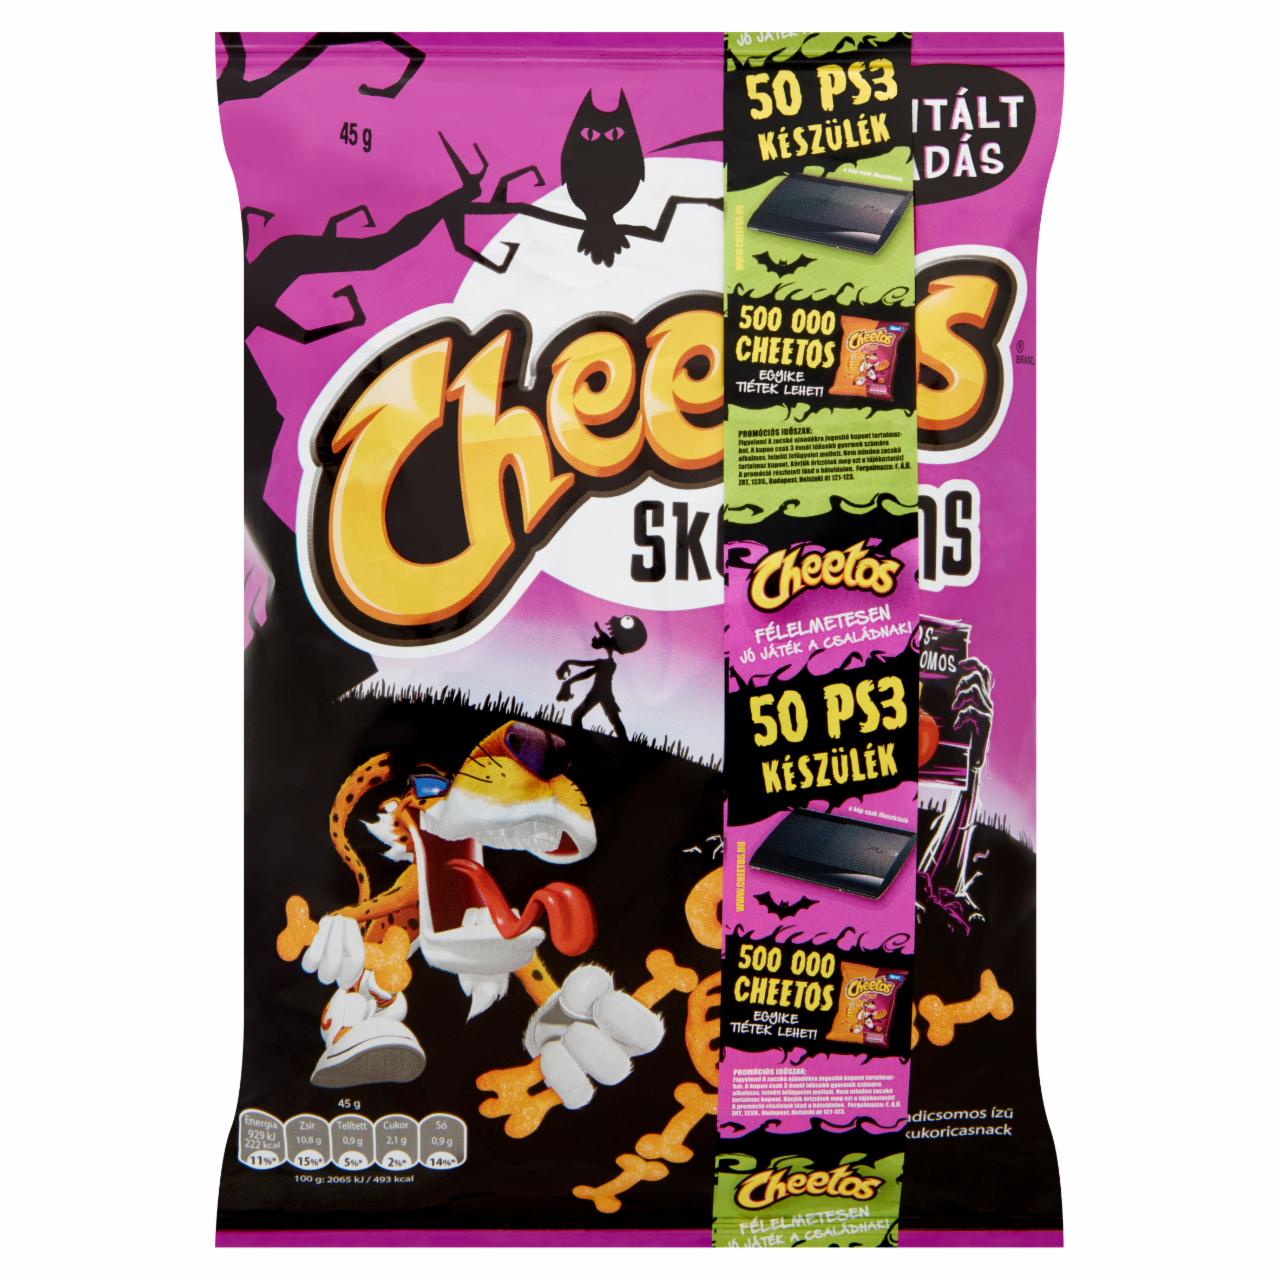 Képek - Cheetos Skeletons sajtos-paradicsomos ízű kukoricasnack 45 g